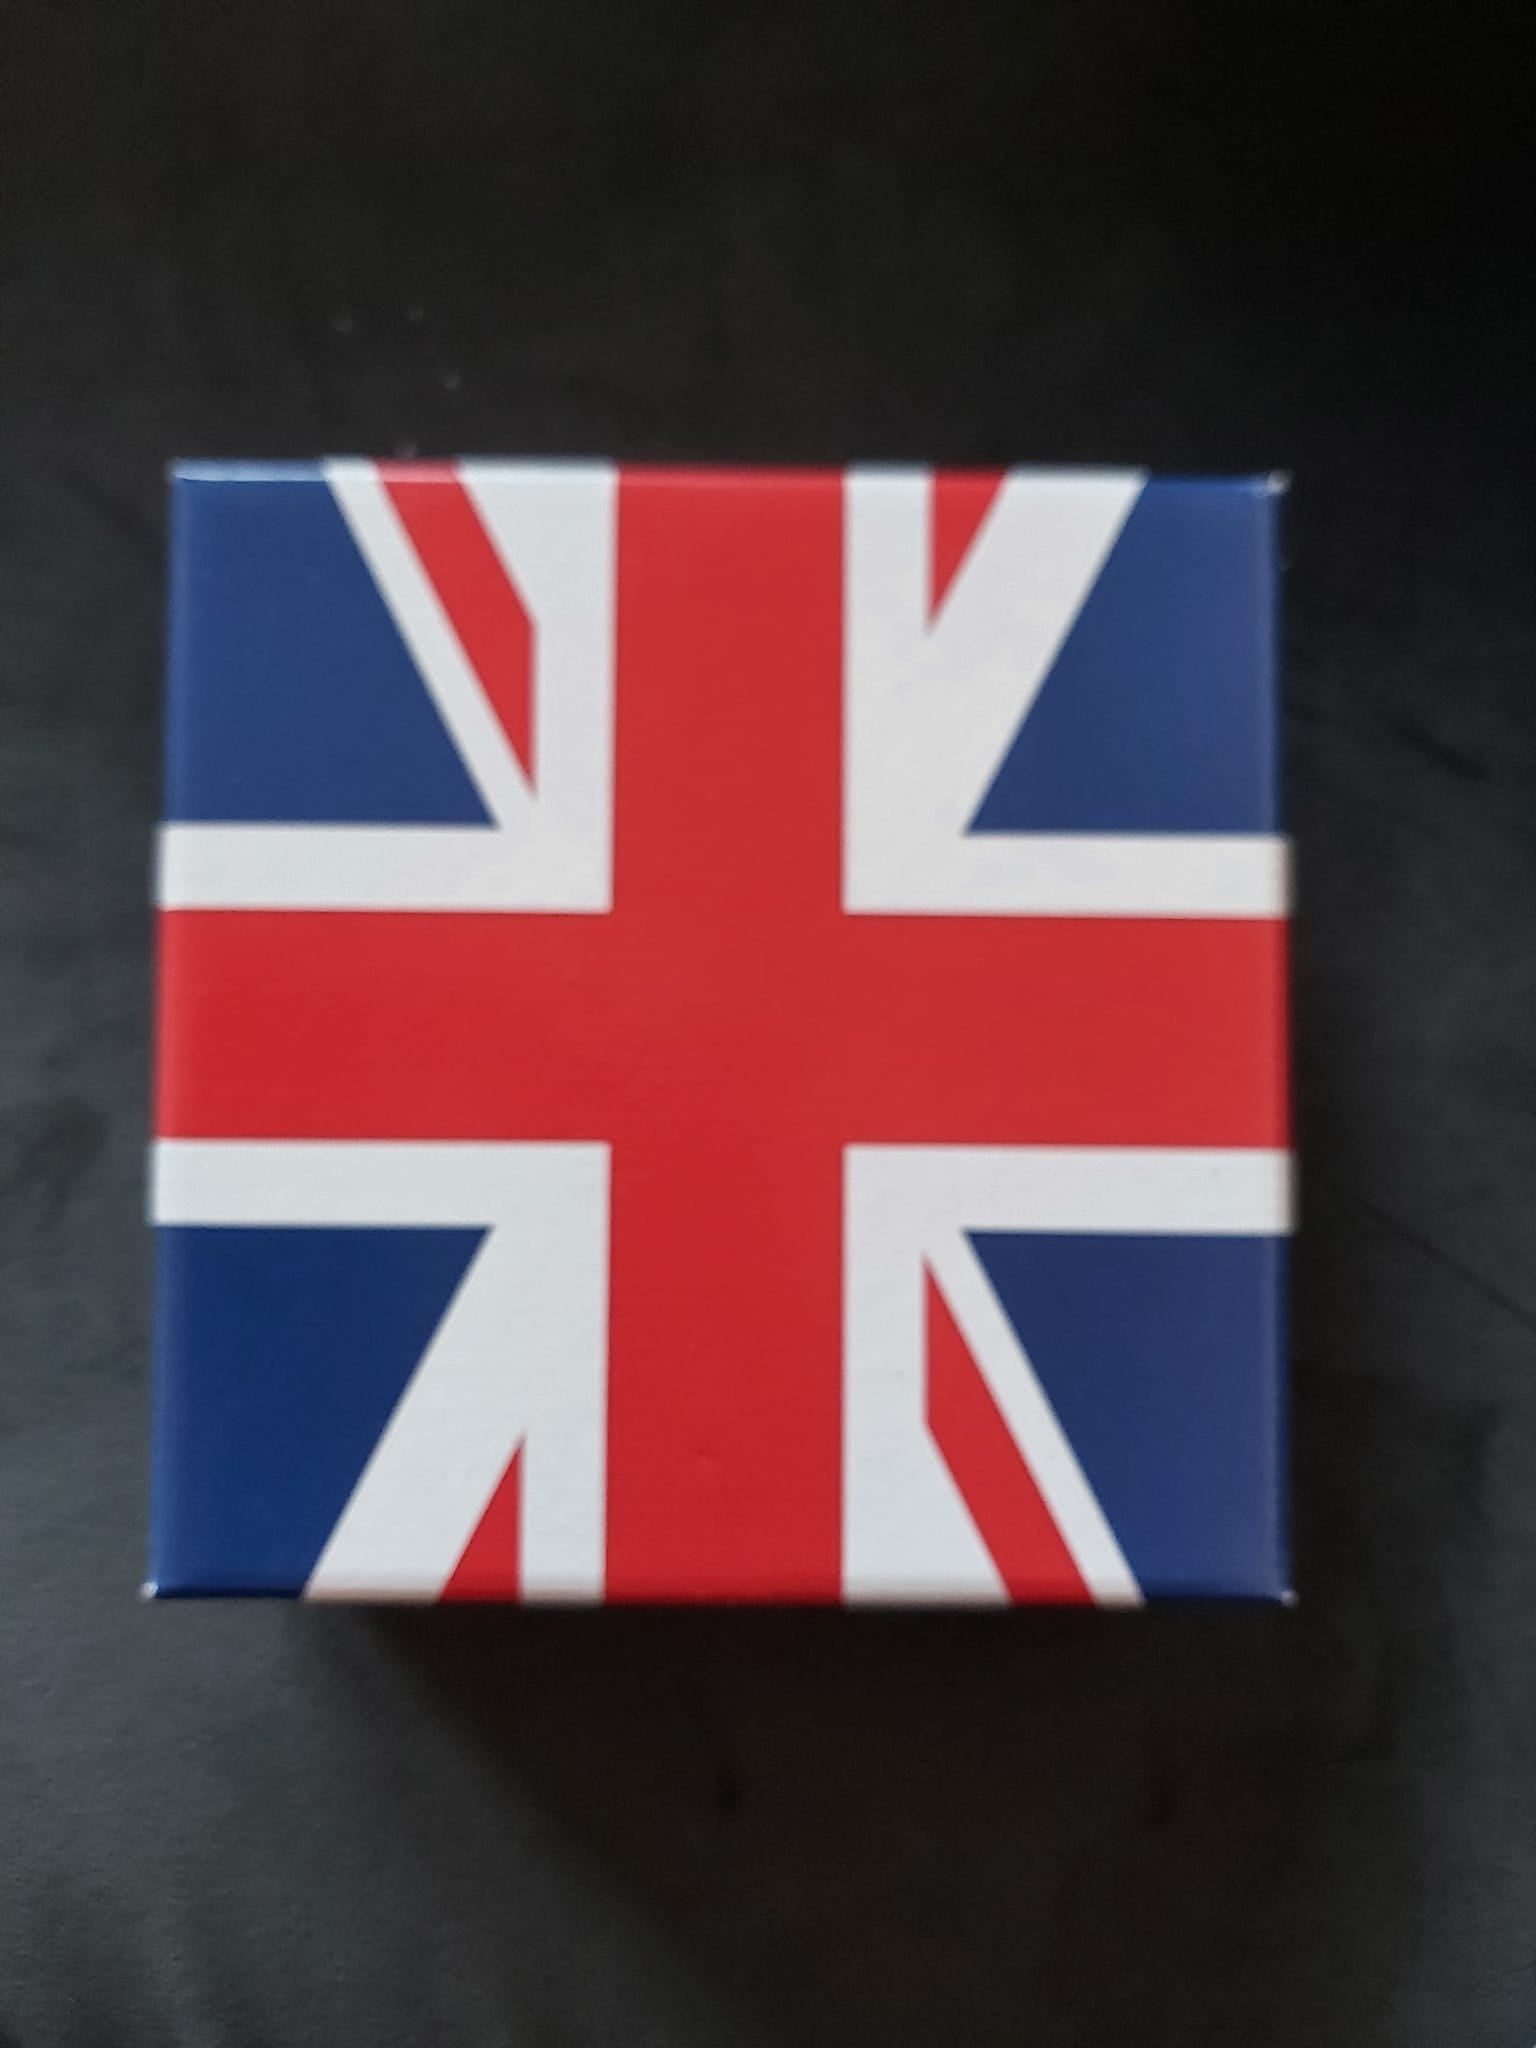 Best Of British Sweets & Chocolate Union Jack Box